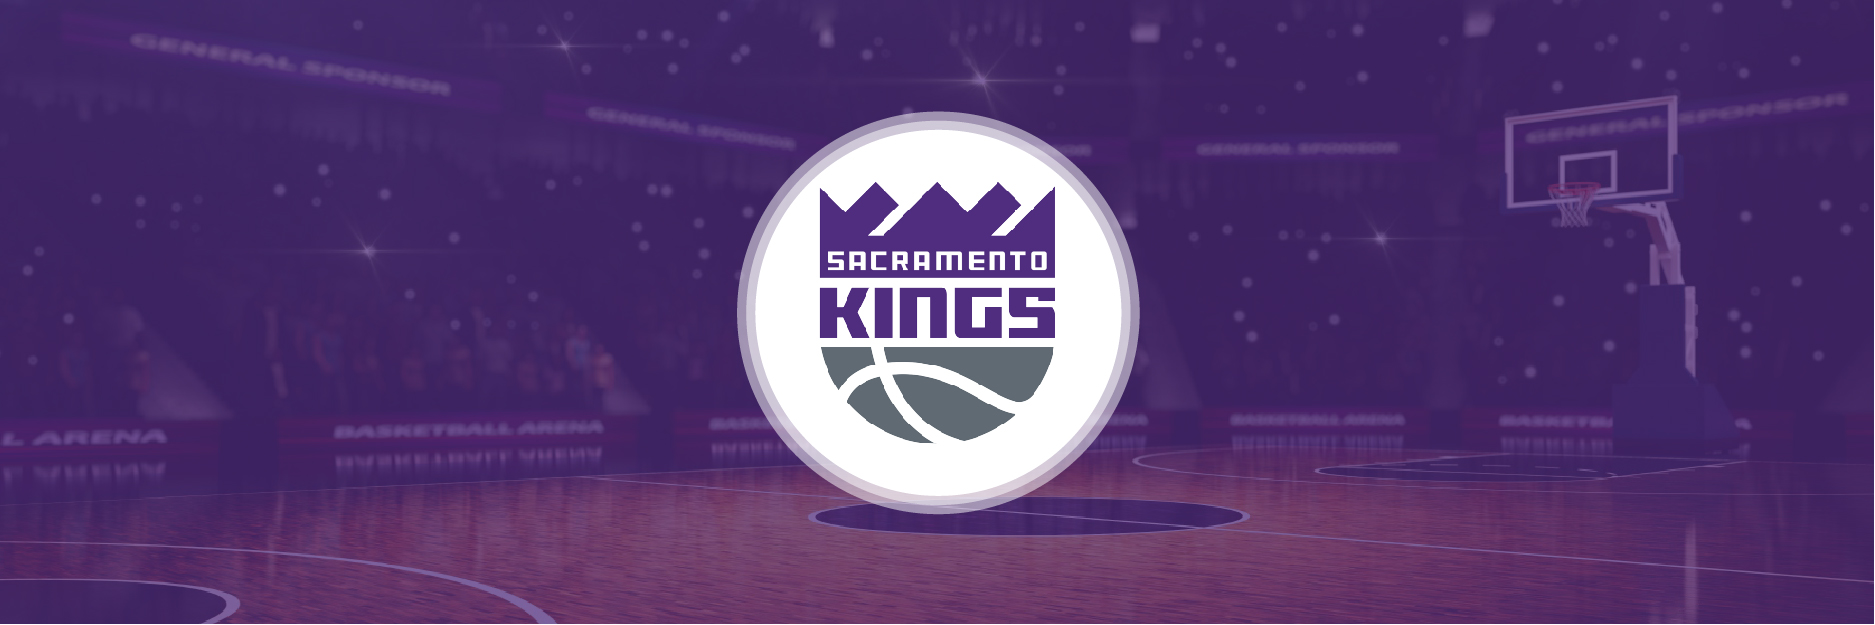 NBA Sacramento Kings 2020 Season Analysis